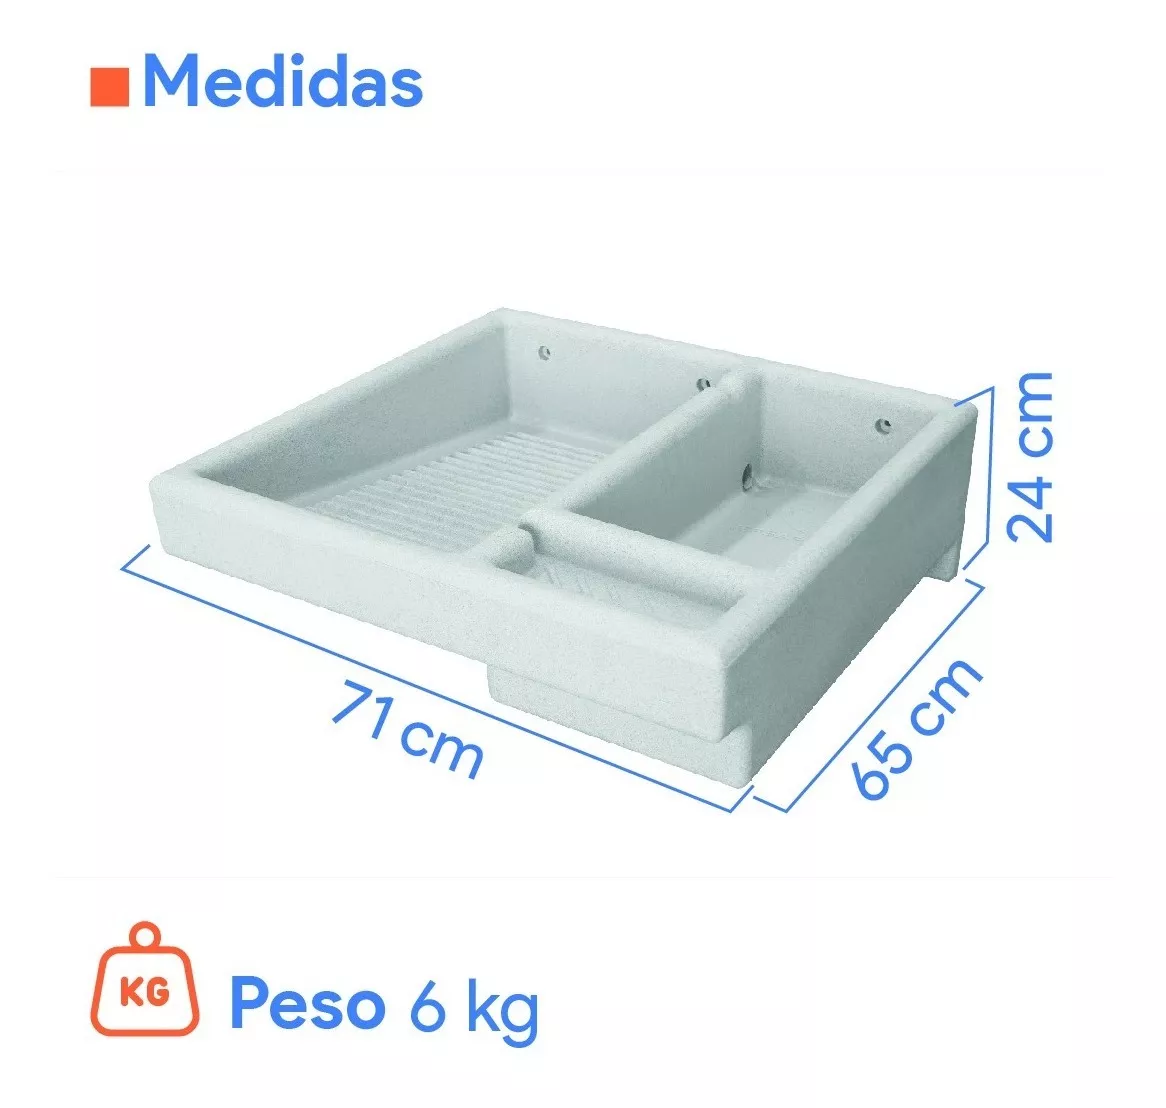 Segunda imagen para búsqueda de lavabo sobreponer rectangular